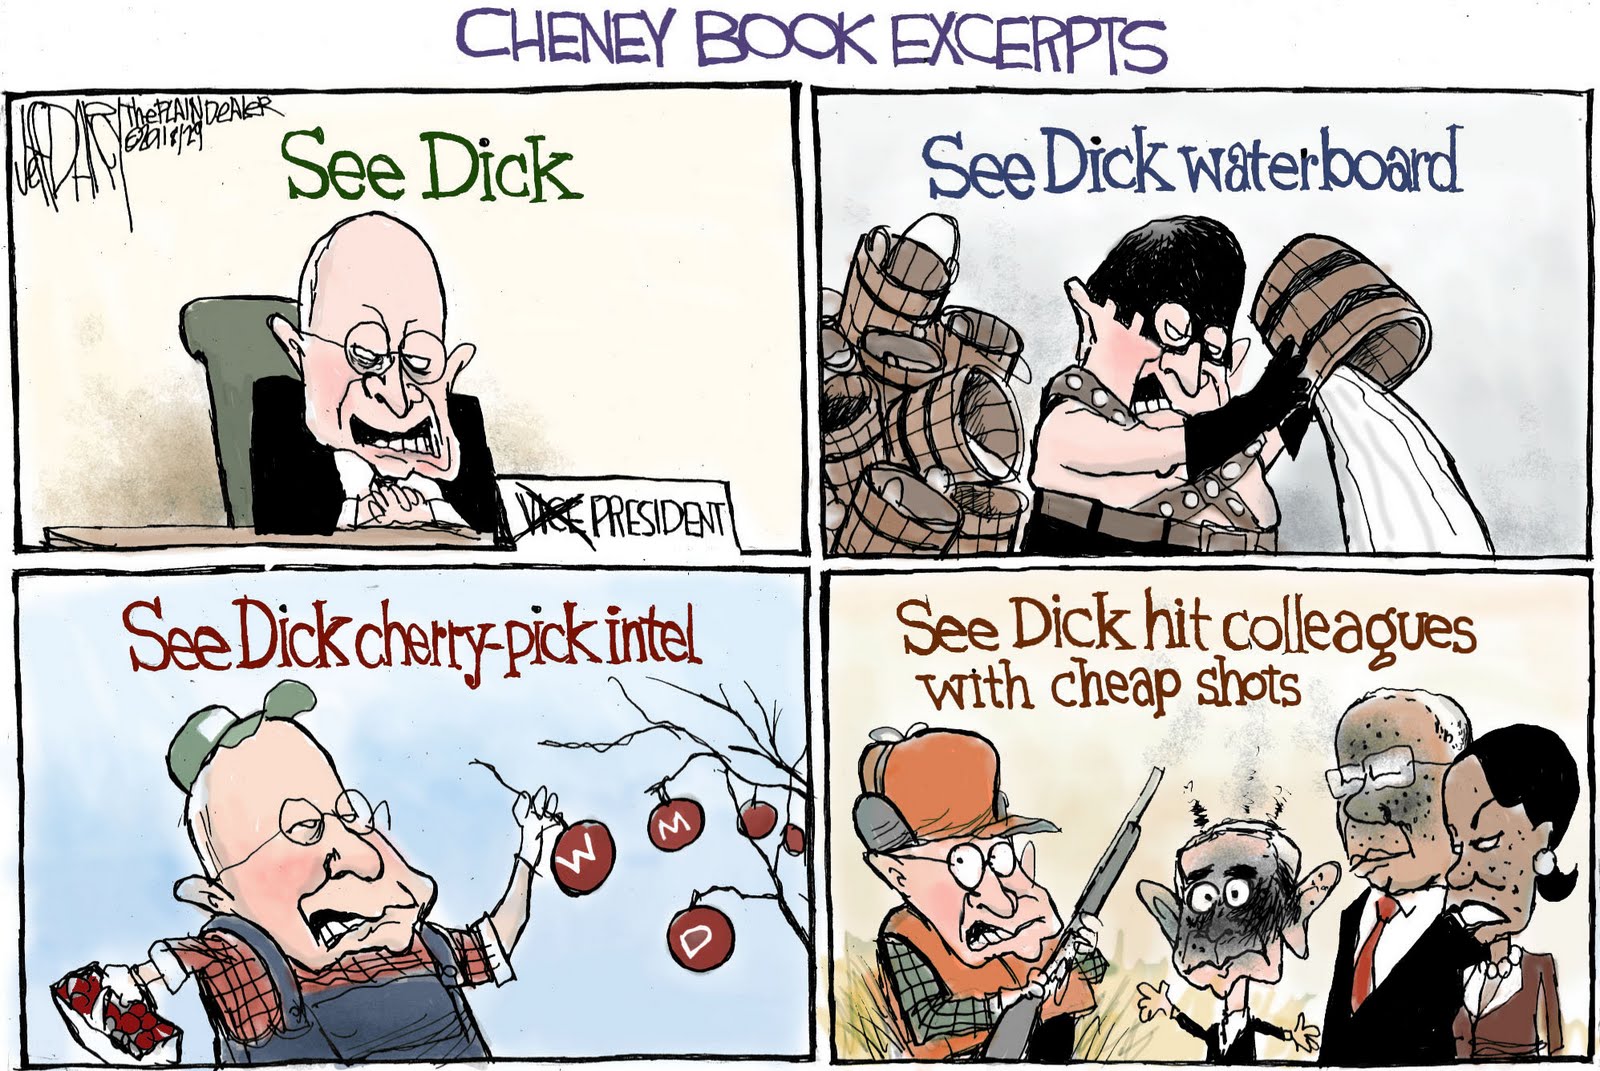 Dick cheney debt doesn't matter